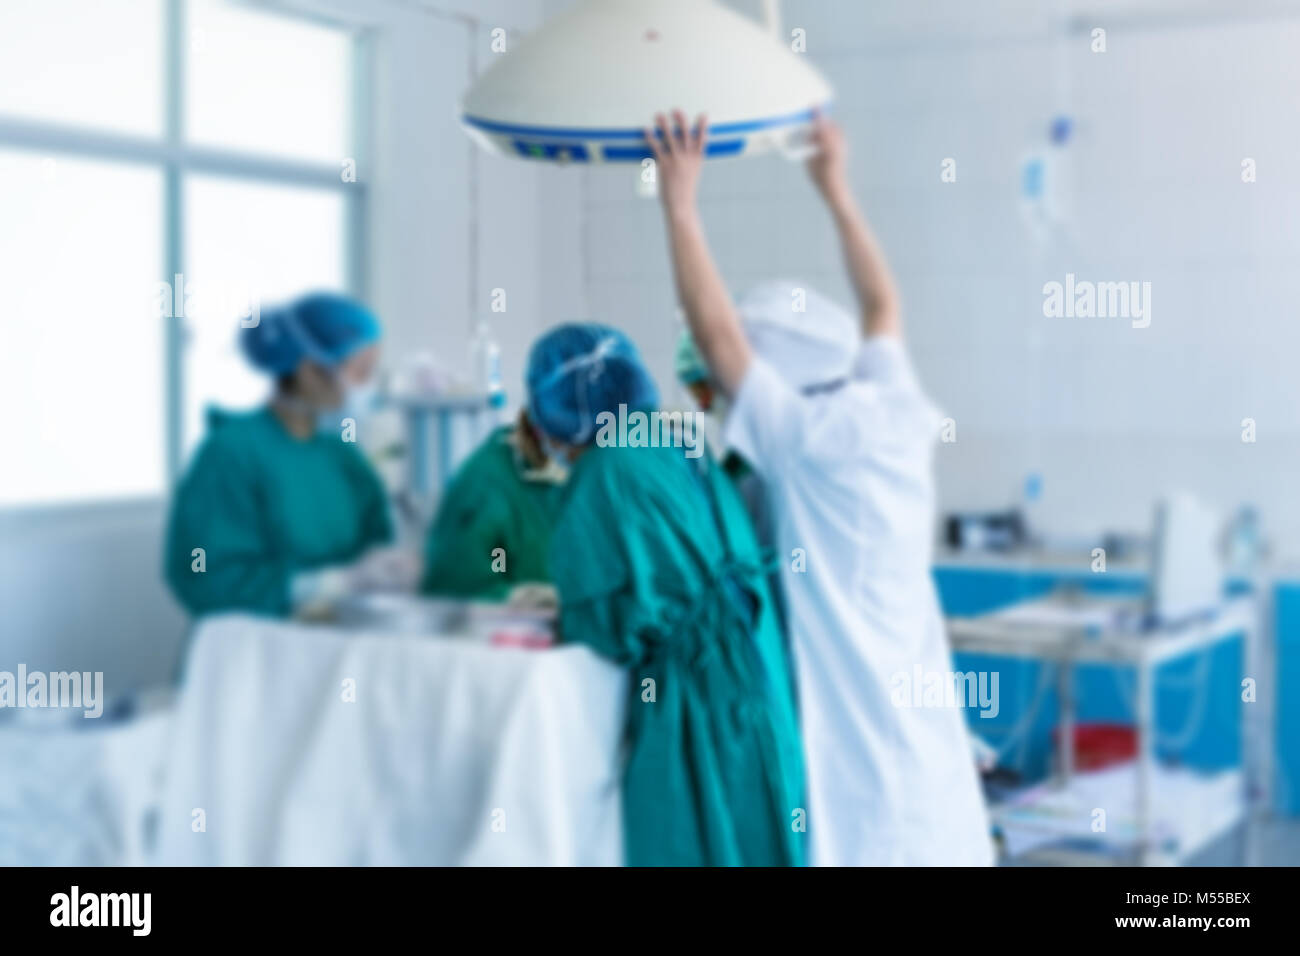 emergency operating room Stock Photo